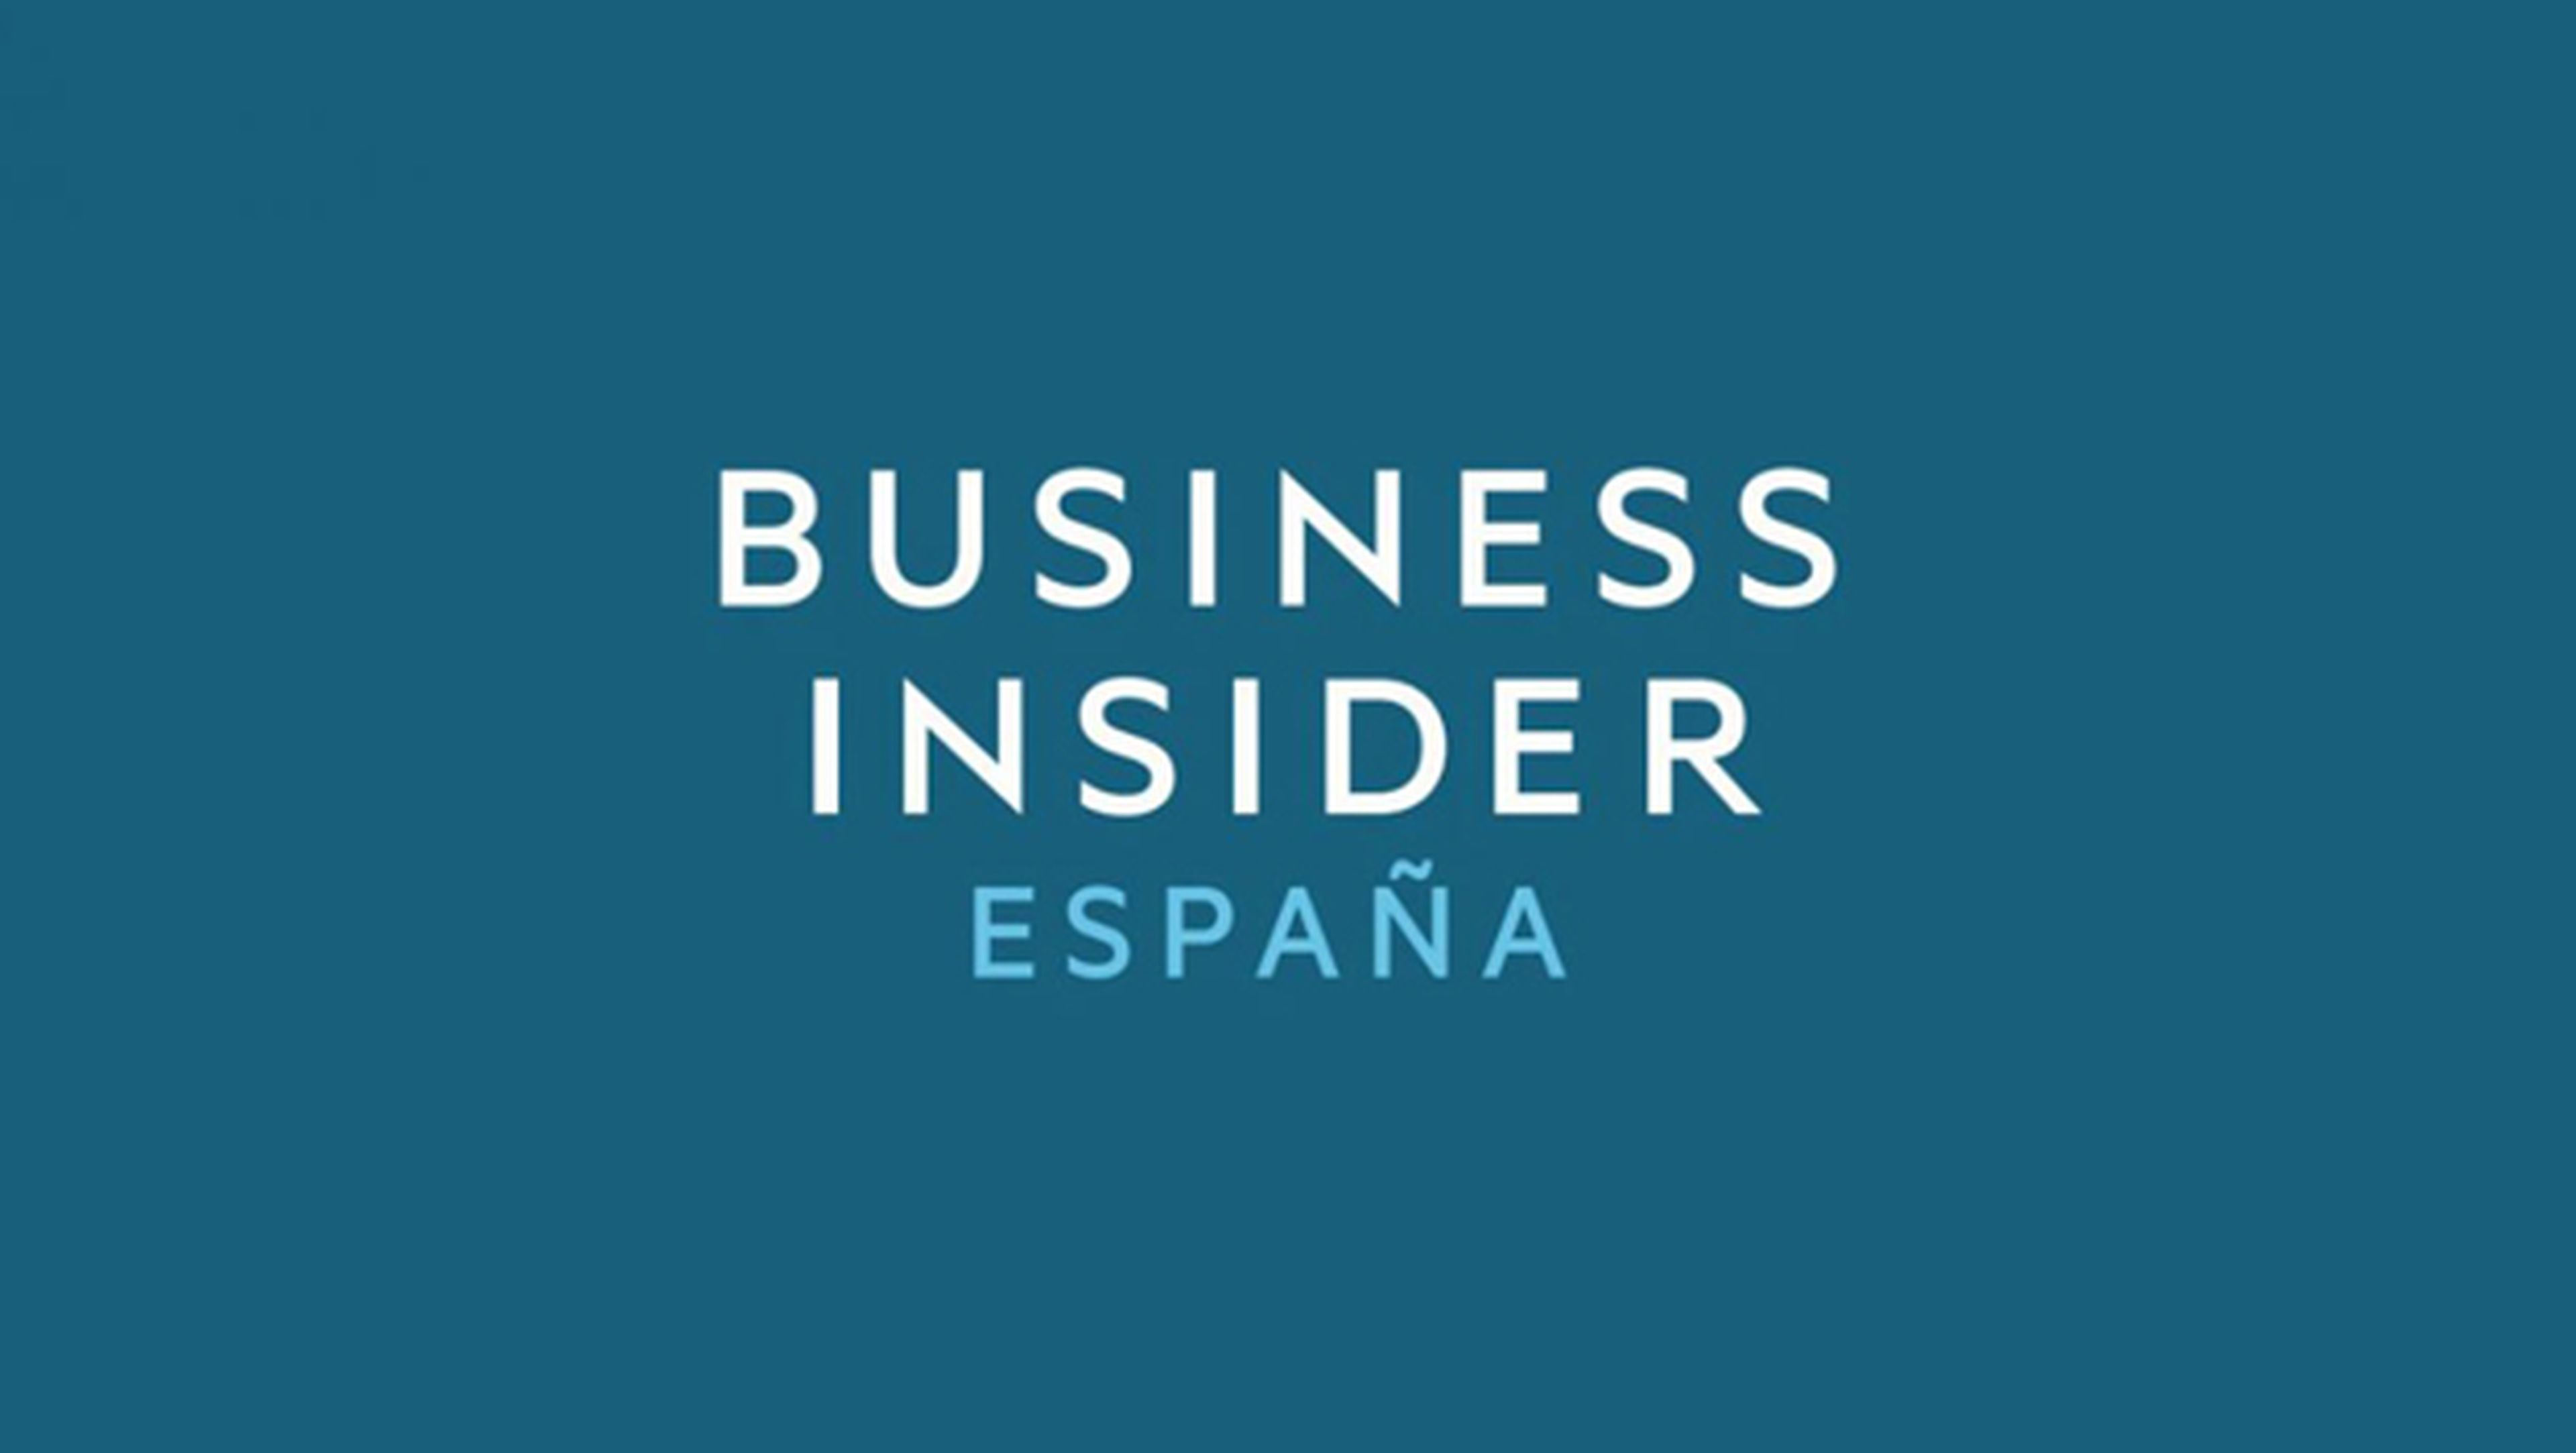 business insider espana axel springer